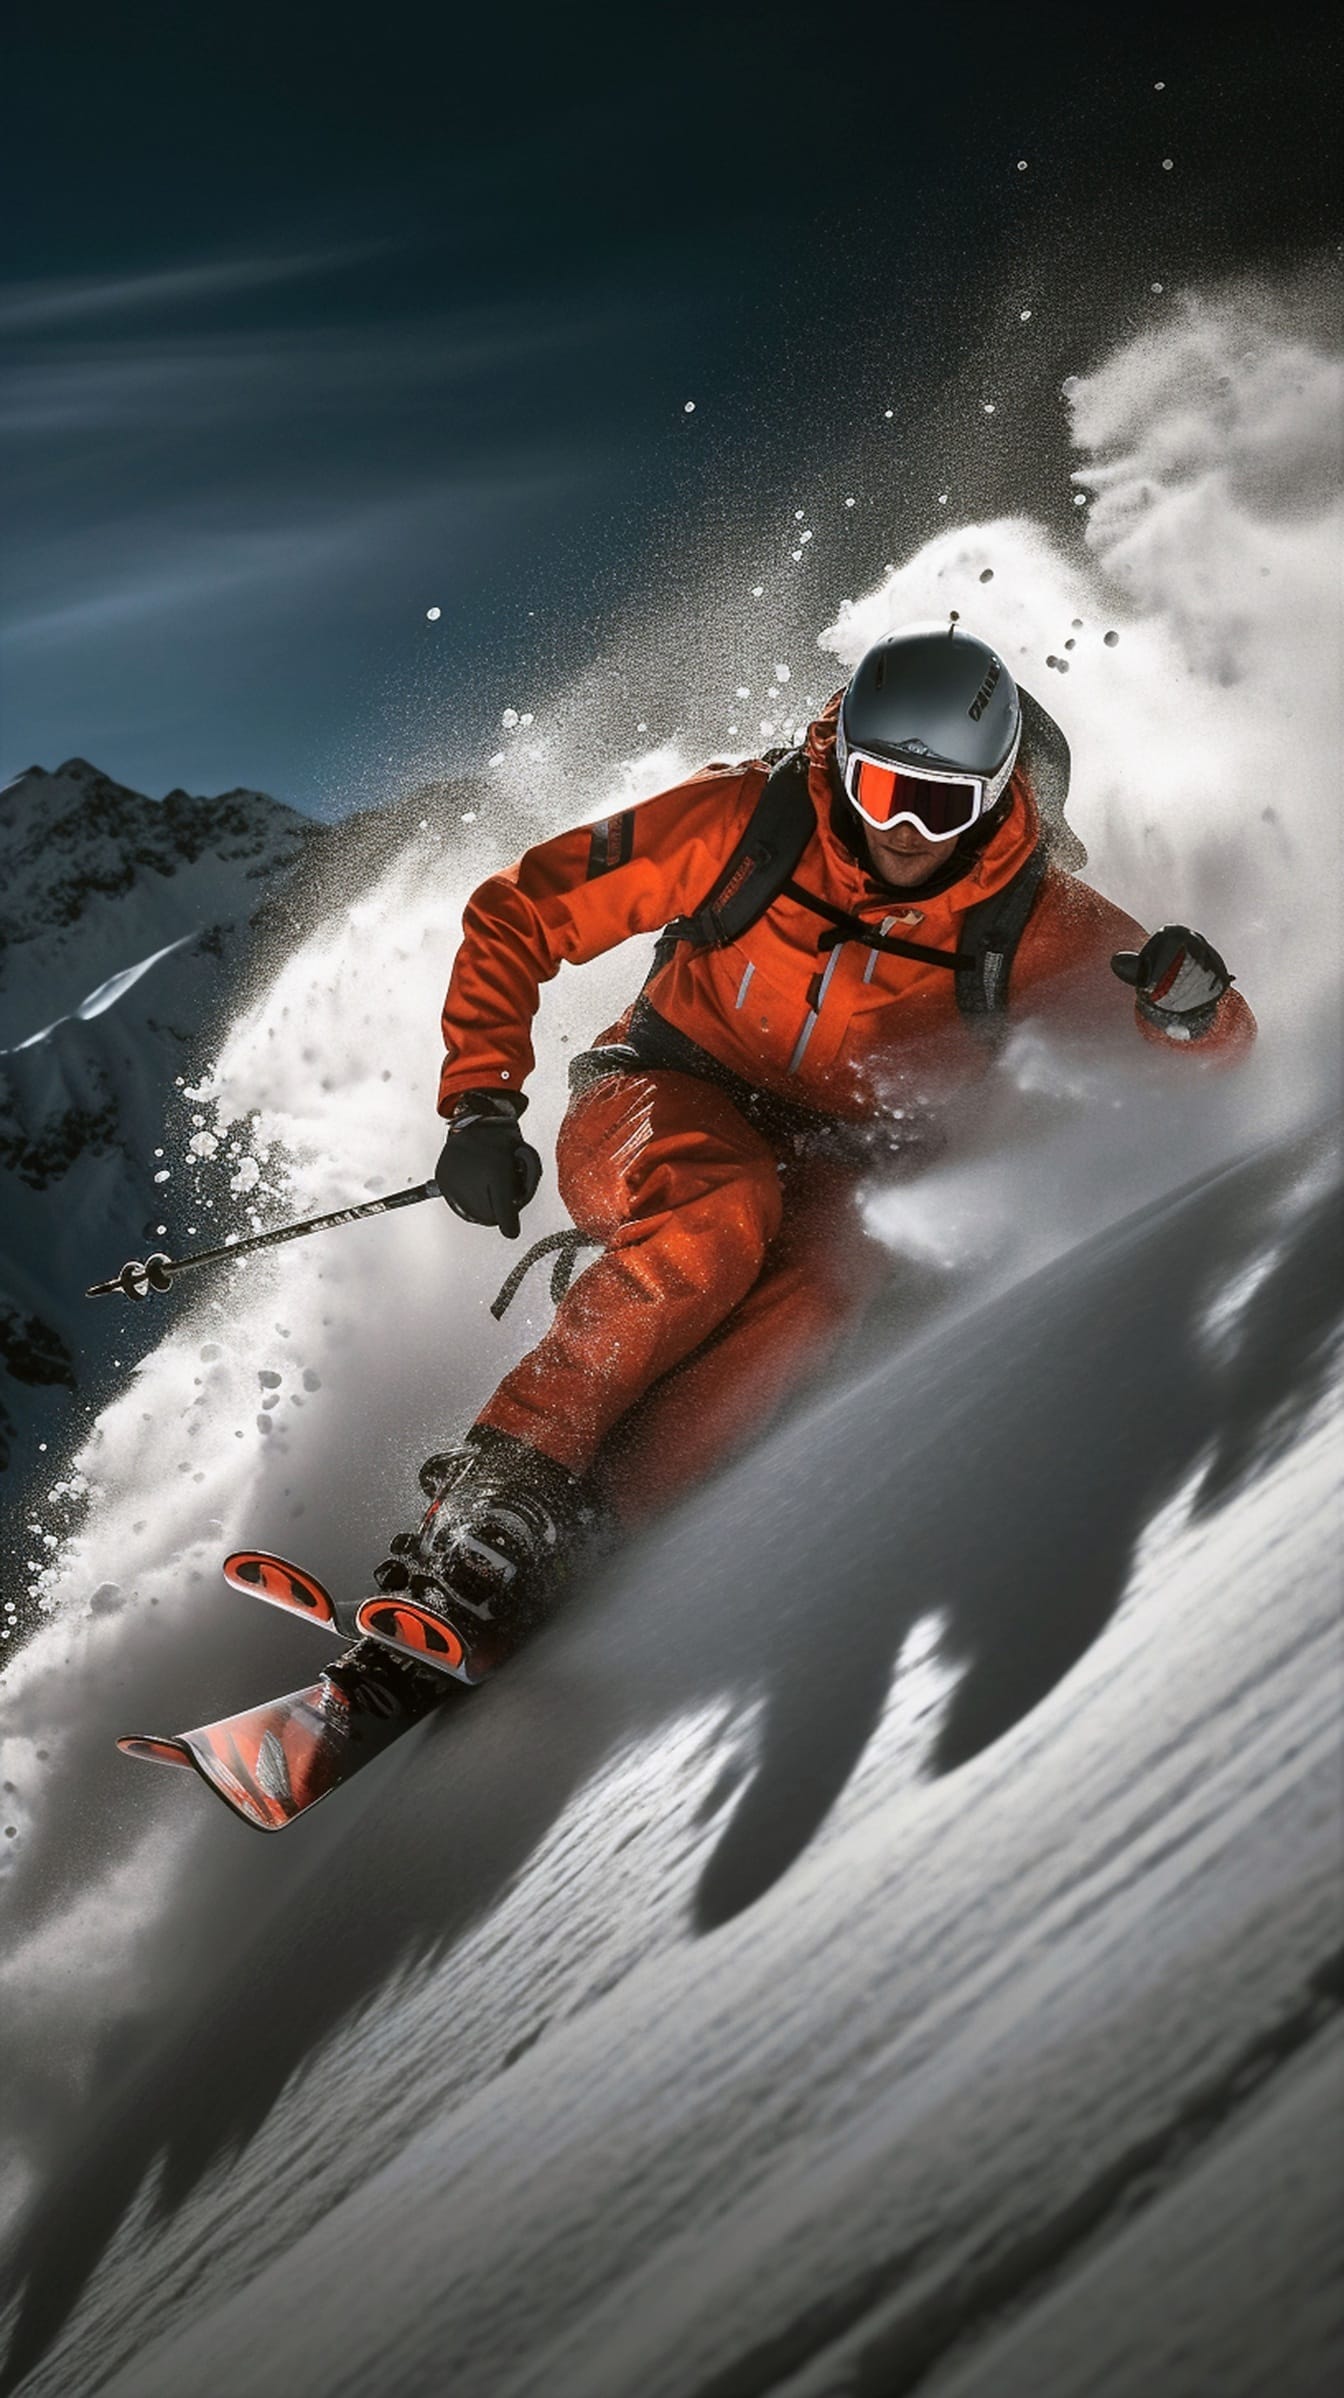 Extreme skier skiing on snowy mountain slope